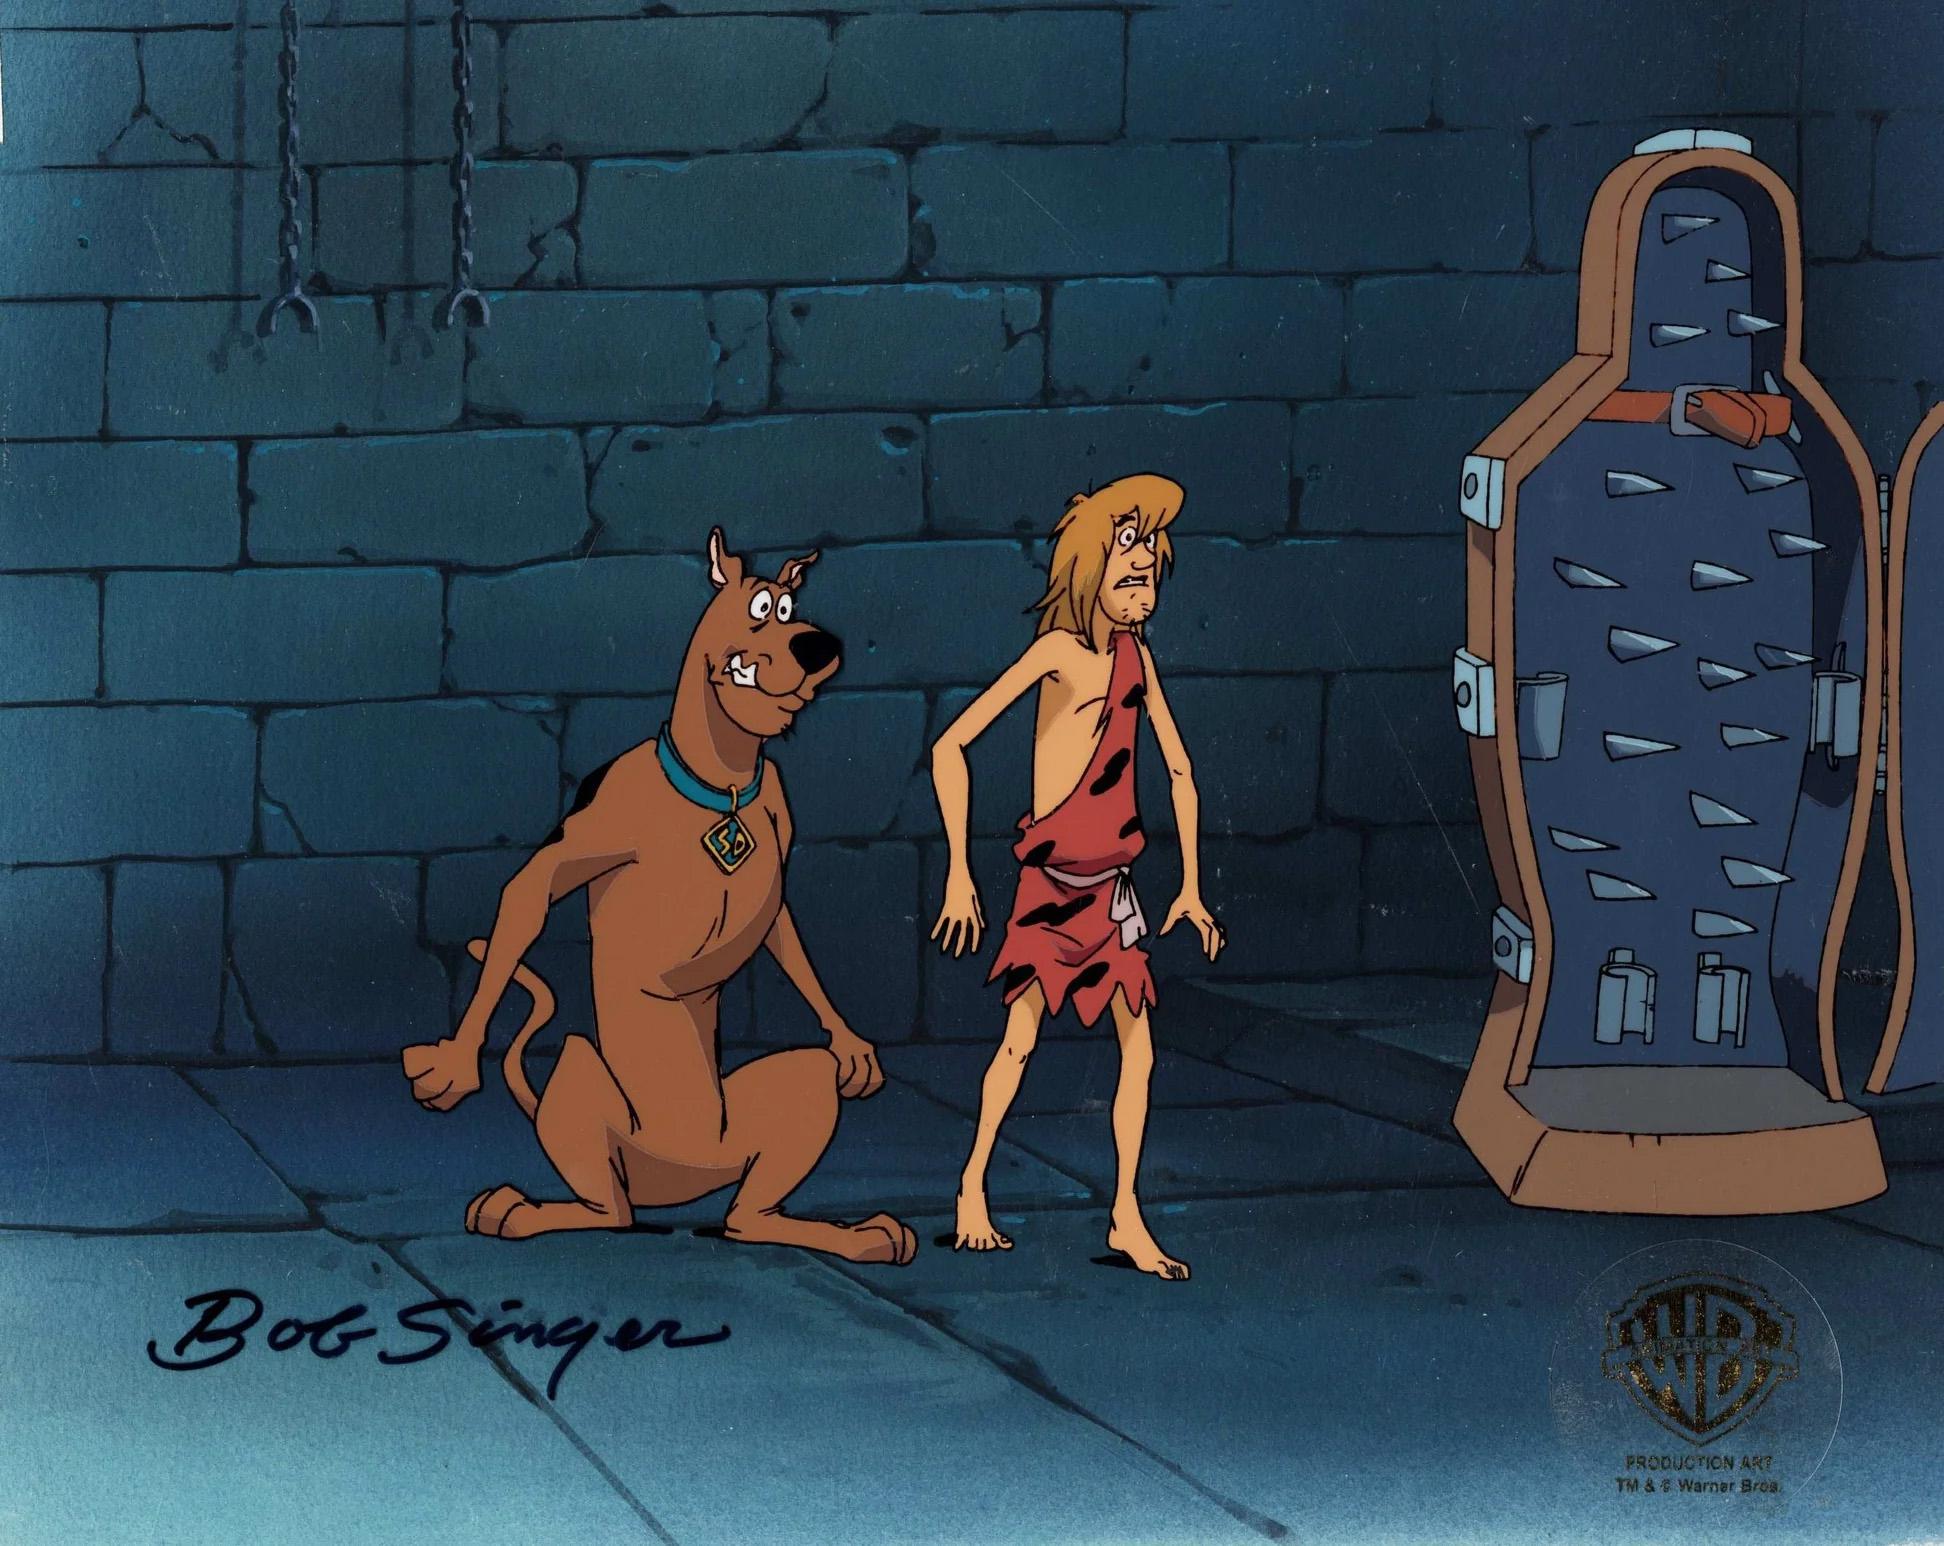 Cel et fond d'origine Scooby Doo : Scooby, Shaggy signé par Bob Singer - Art de Warner Bros. Studio Artists